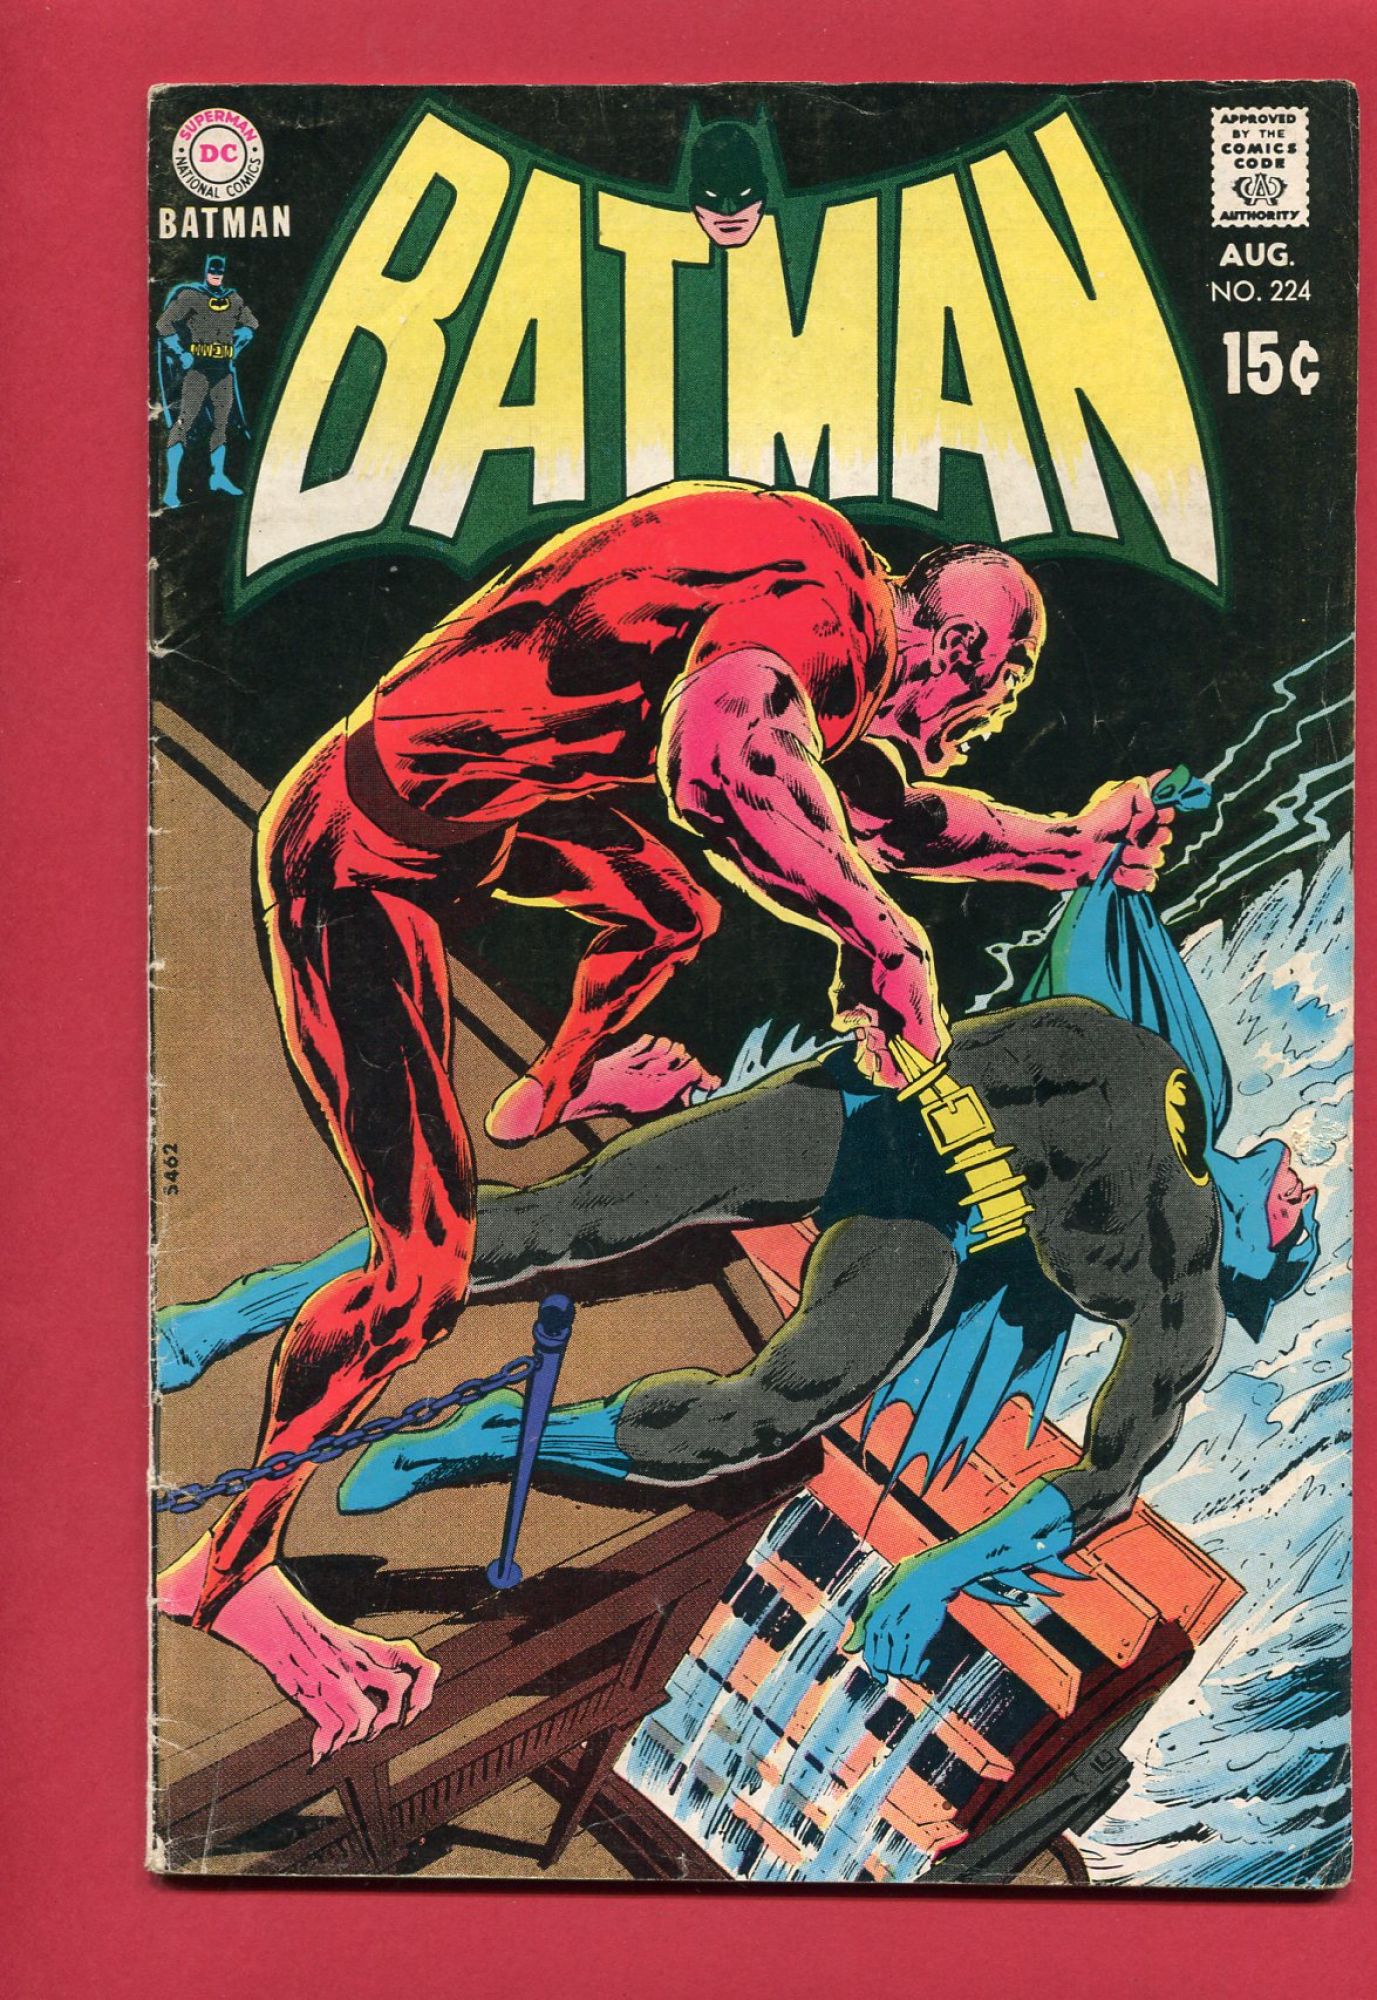 Batman #224, Aug 1970, 4.0 VG